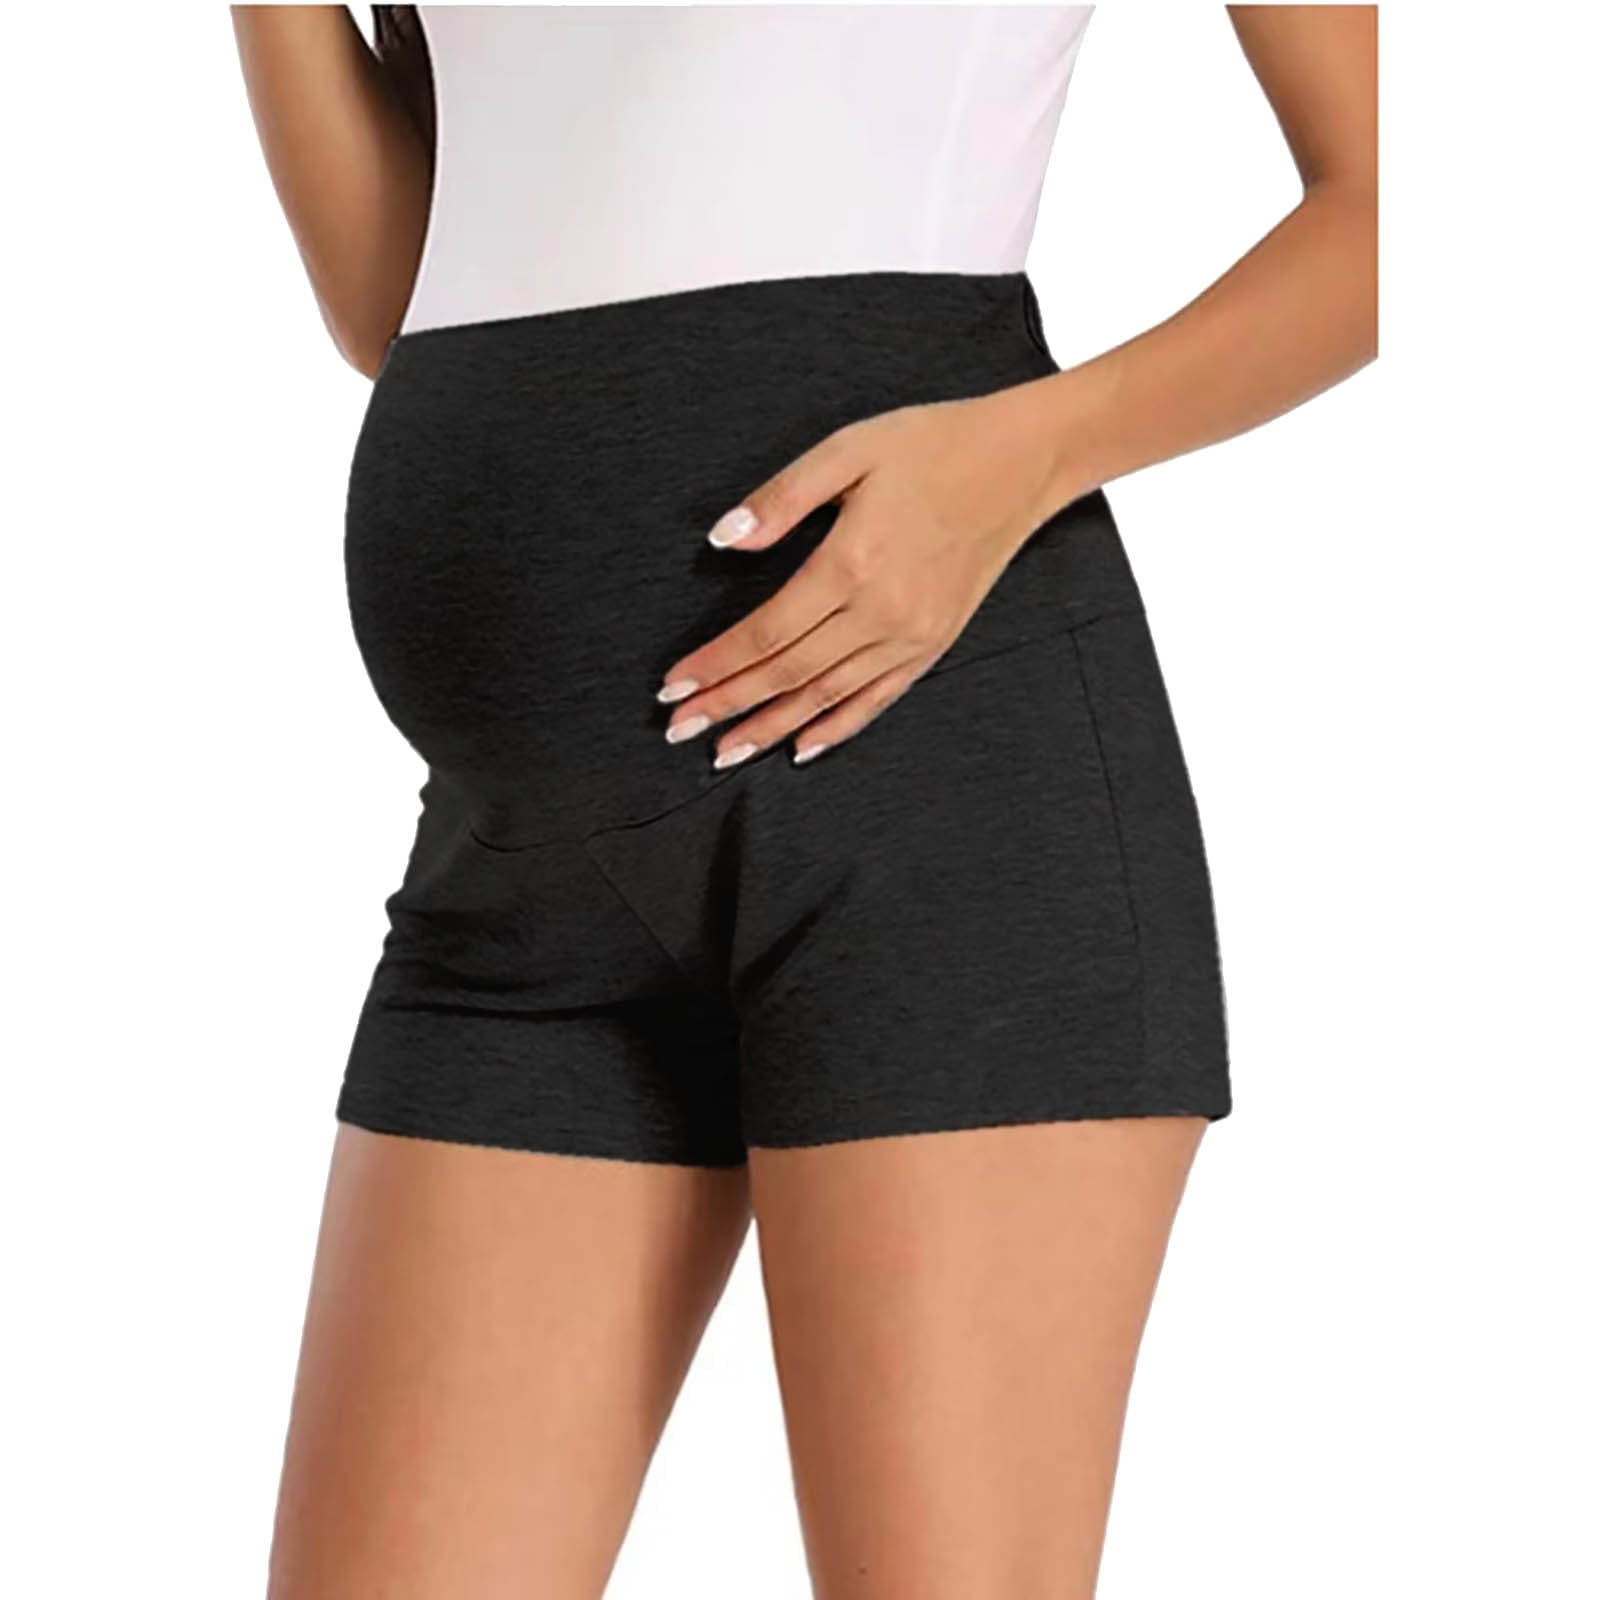 Maternity Shorts For Women Pregnancy Elastic Waist Home Sleep Pajama ...